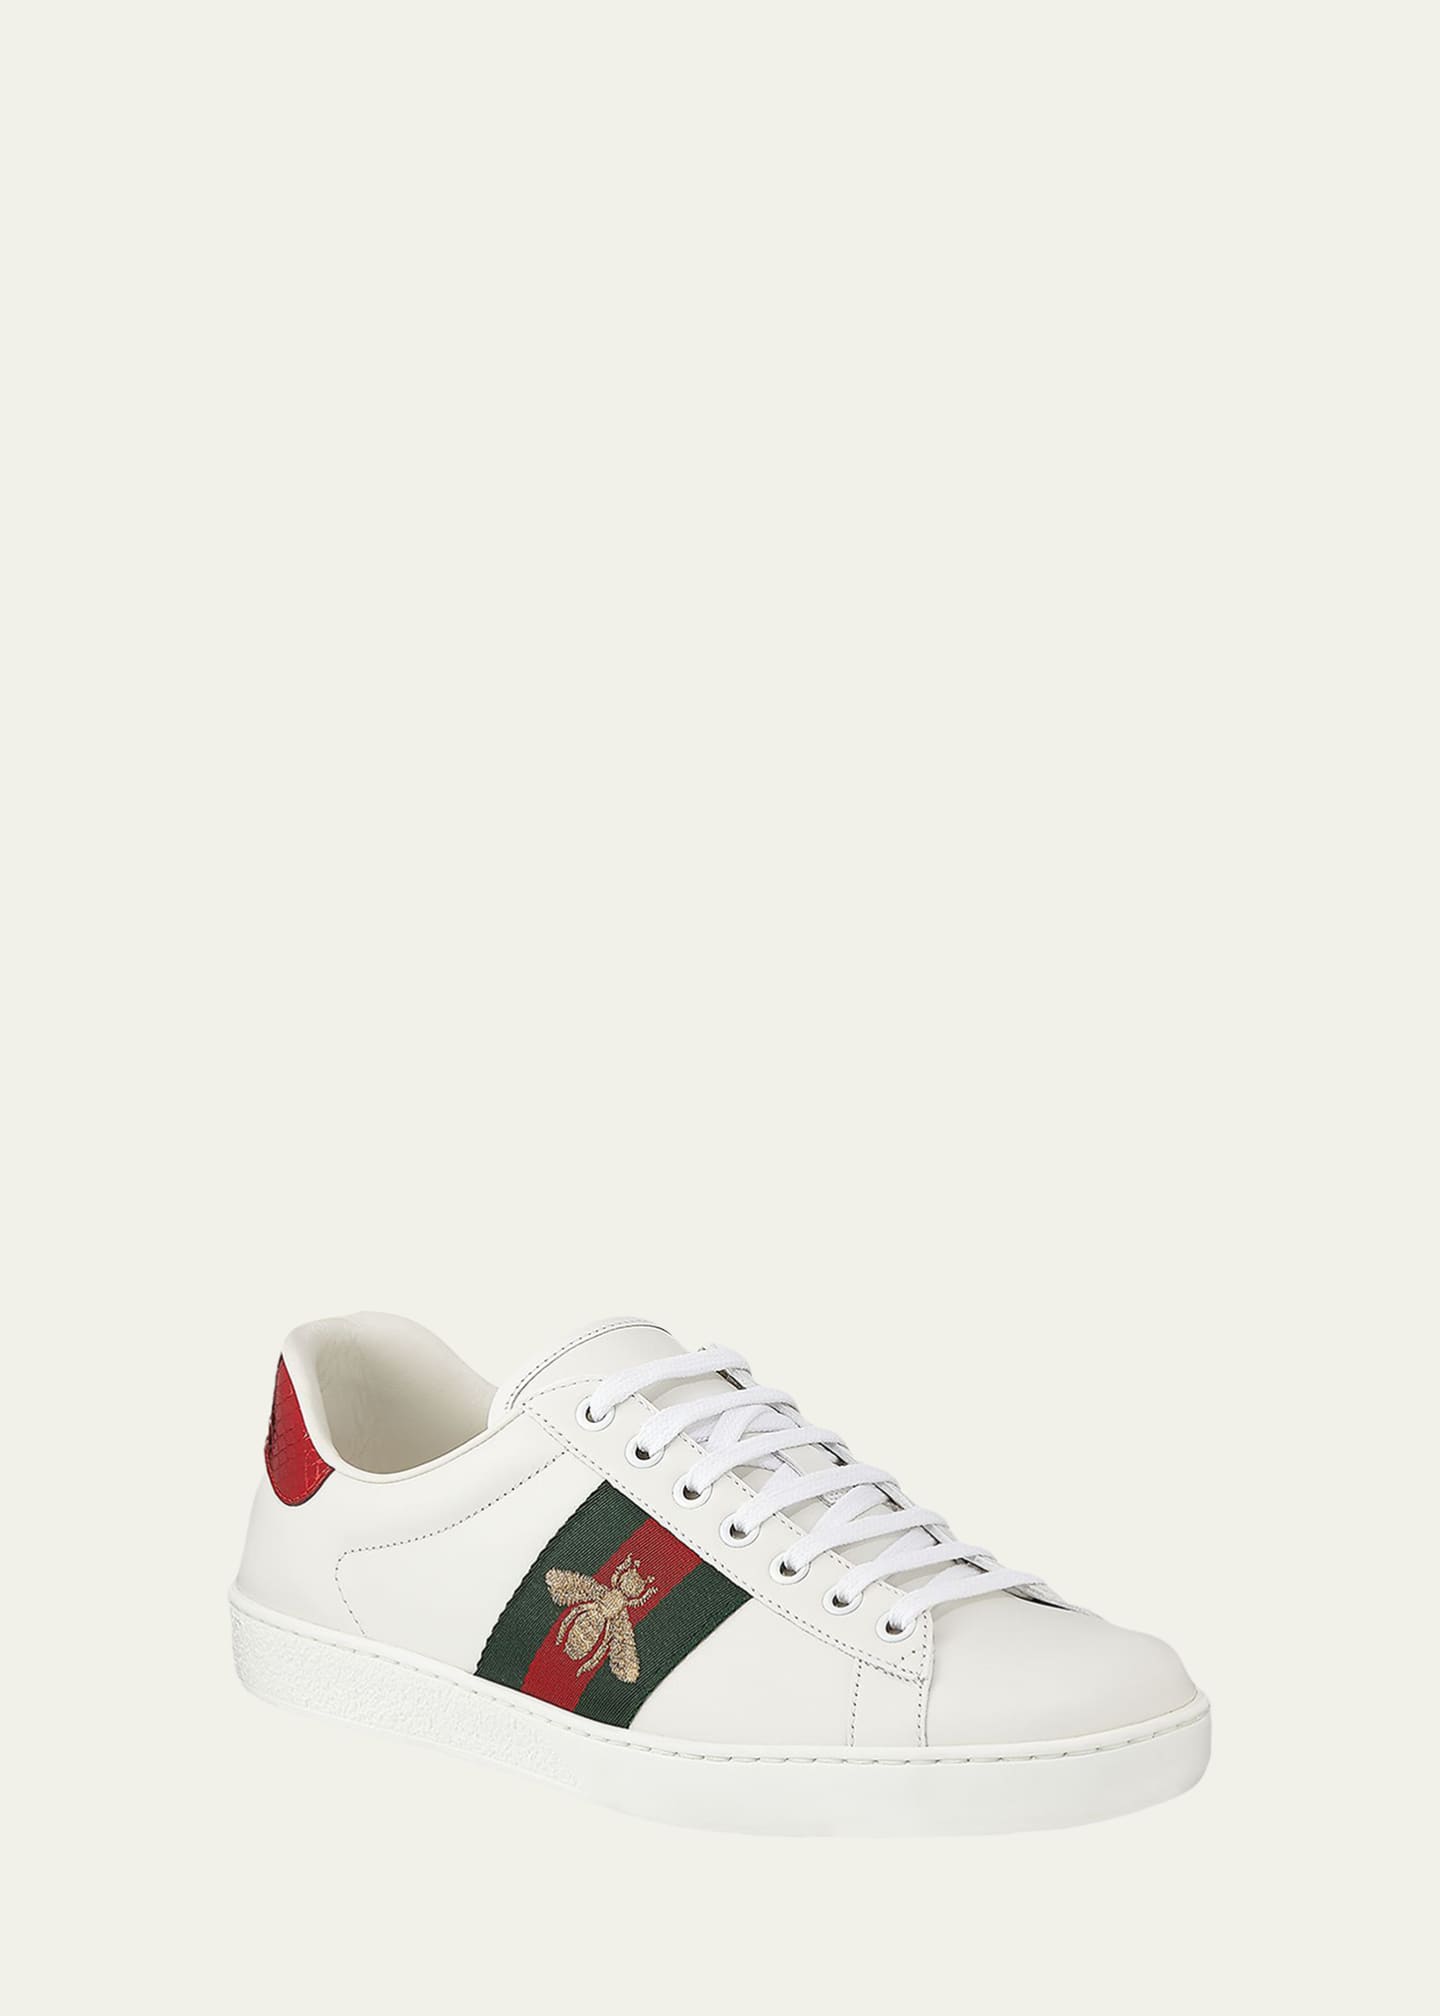 Gucci New Ace Sneaker - Men's